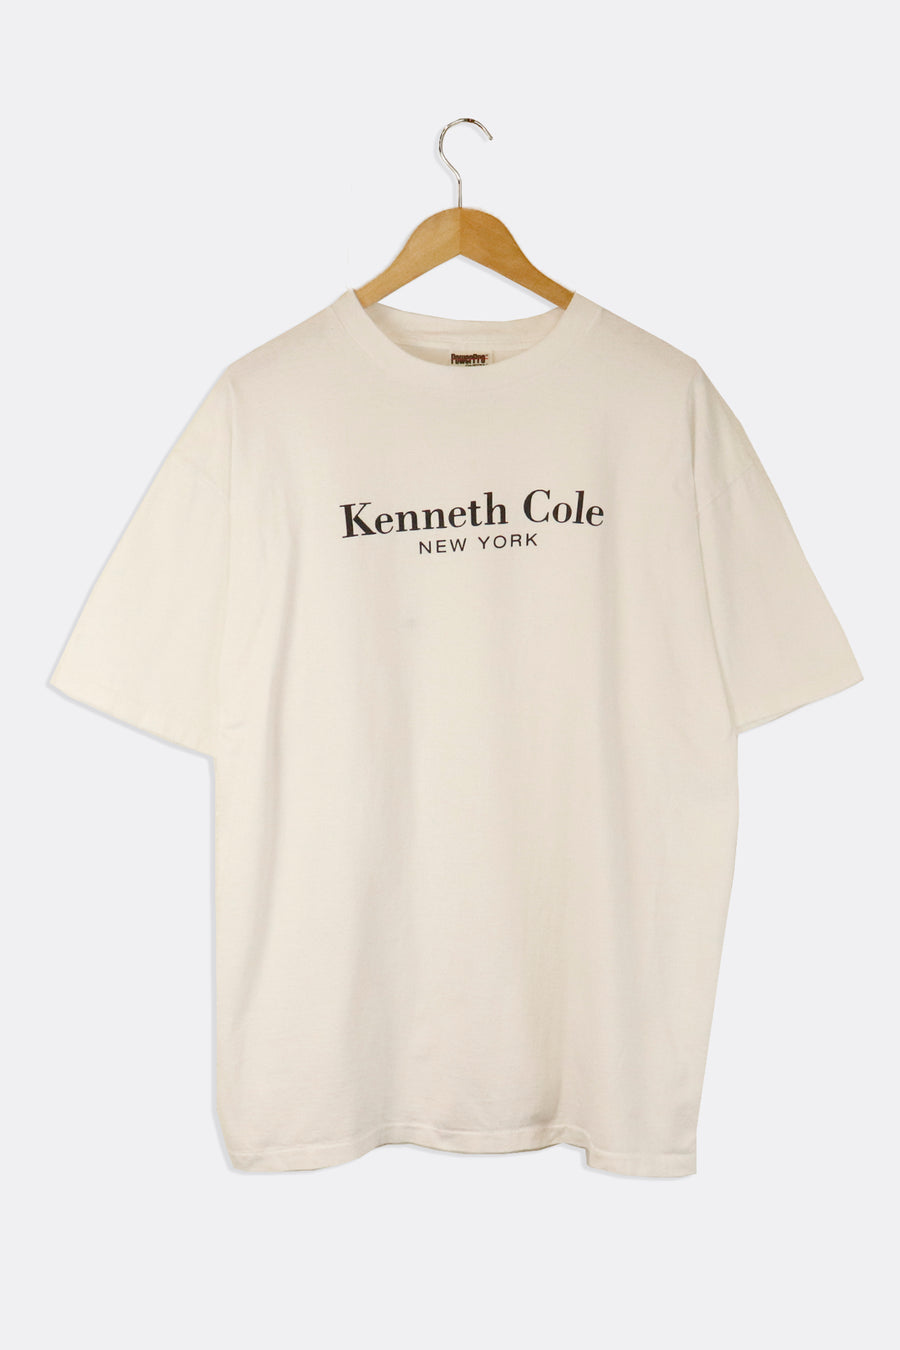 Vintage Simple Kenneth Cole New York Black Font Vinyl T Shirt Sz XL